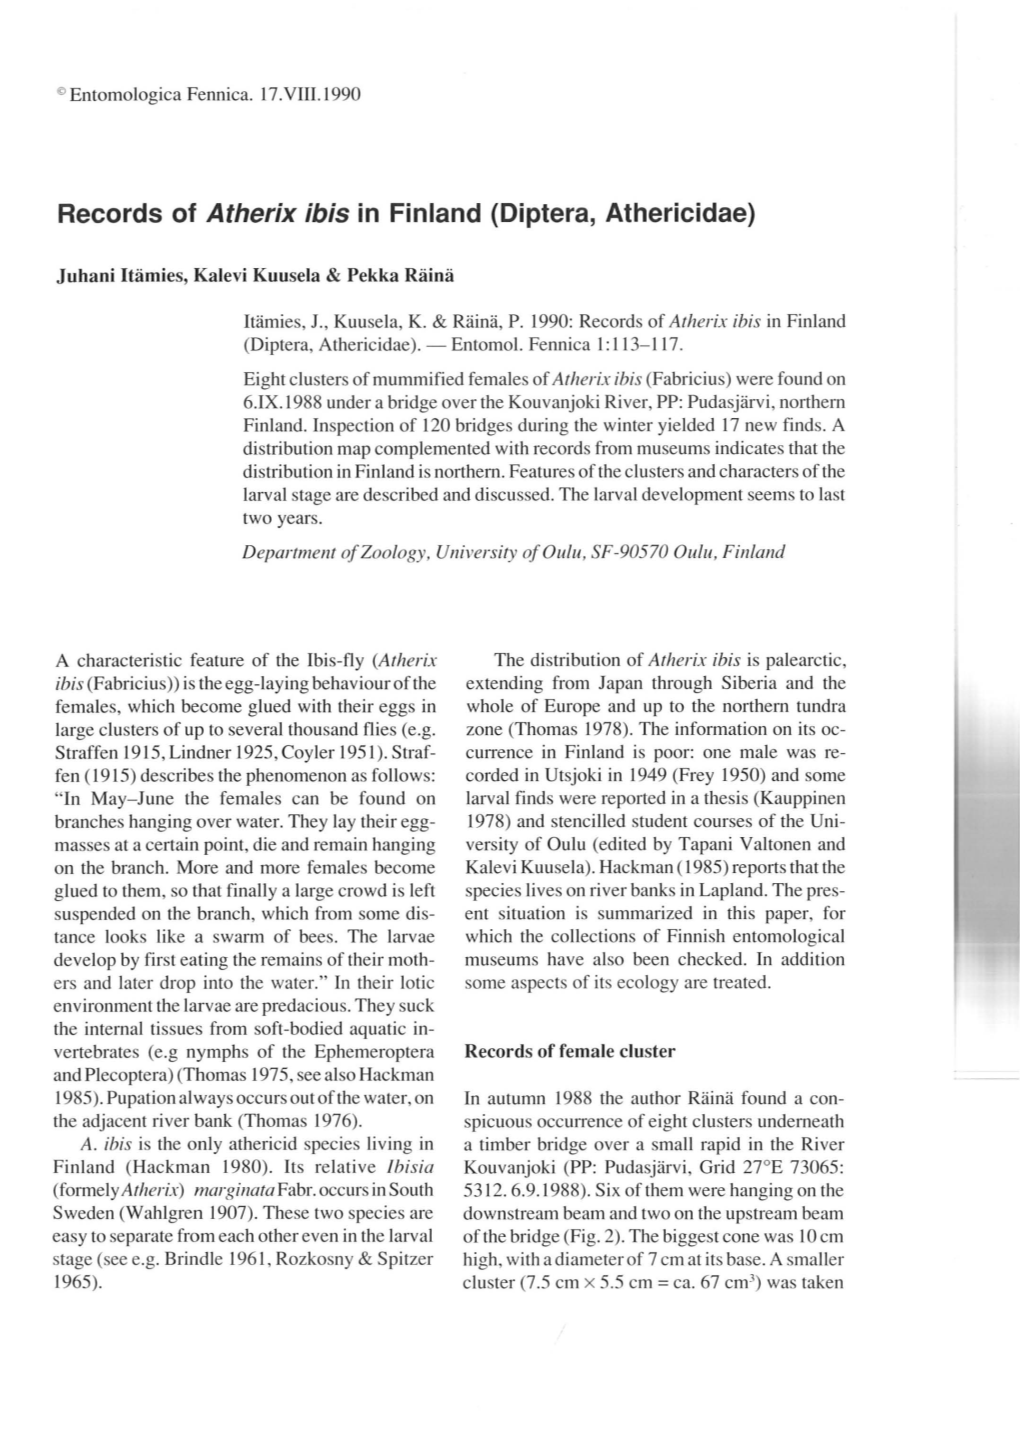 Records of Atherix Ibis in Finland (Diptera, Athericidae) Juhani Itiimies, Kalevi Kuusela & Pekka Riiinii